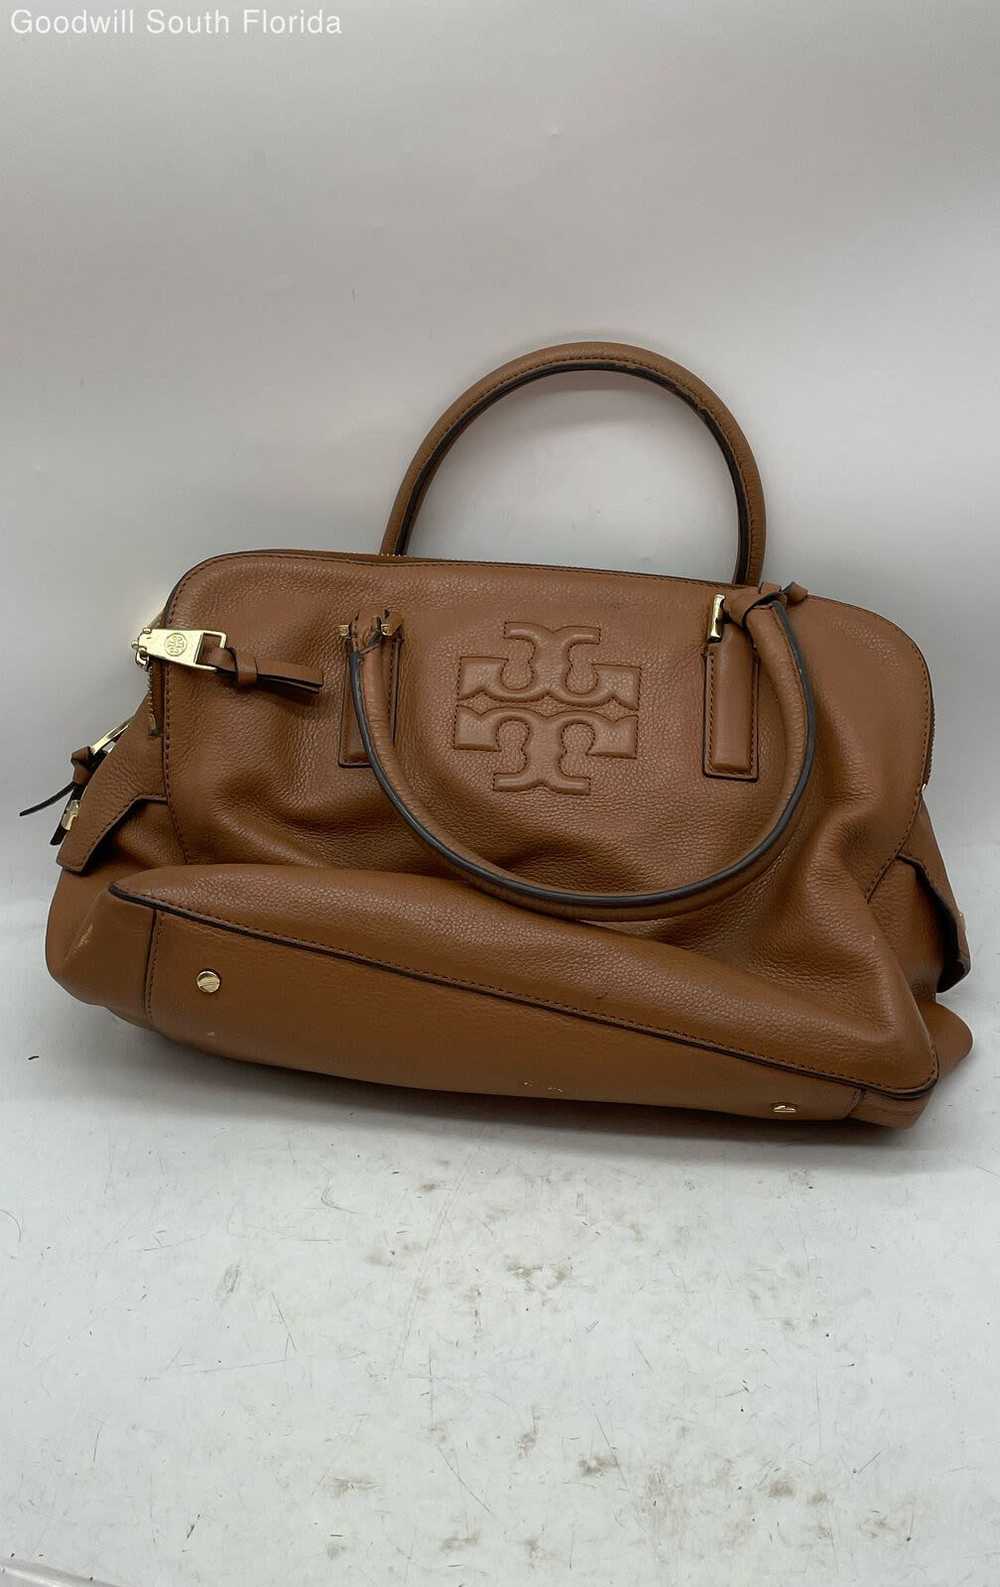 Tory Burch Brown Handbag Shoulder Bag - image 1